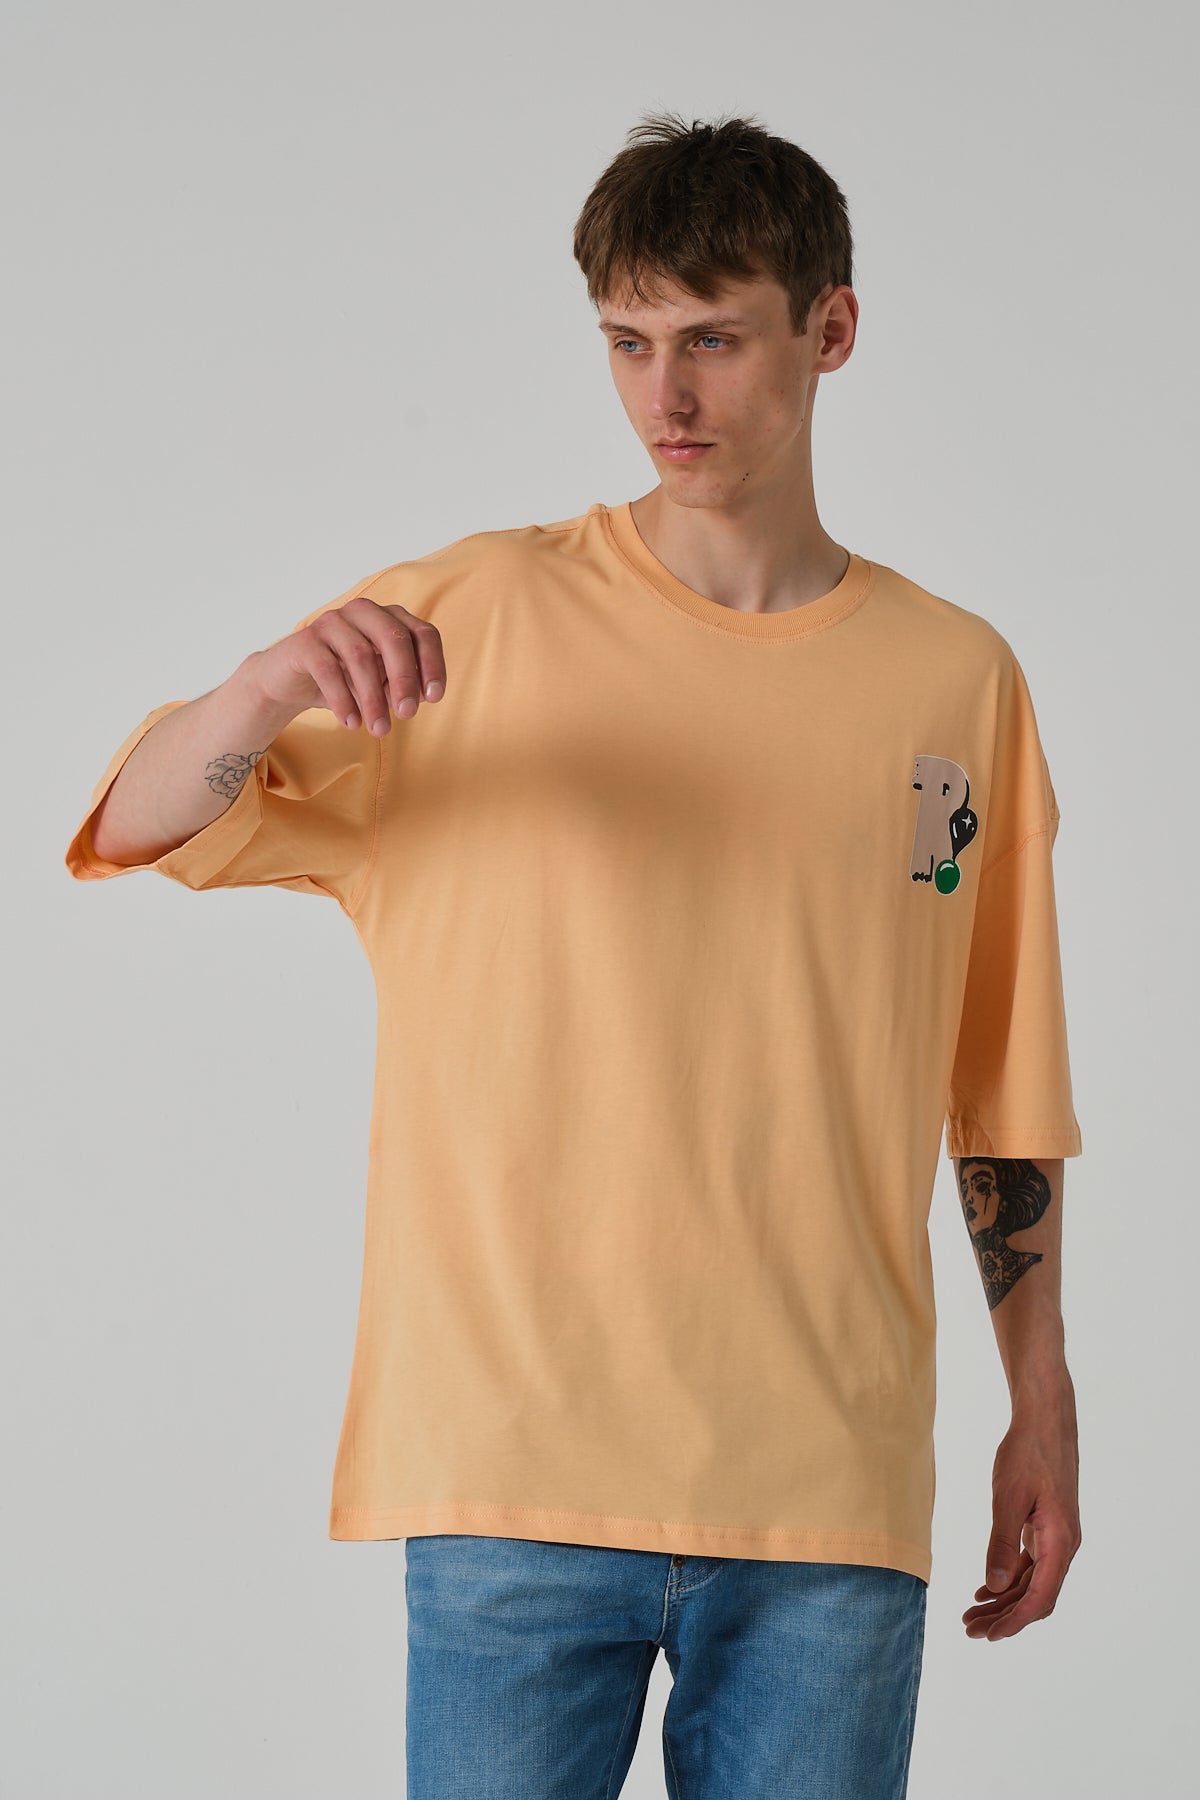 Respect T-Shirt - Oranj